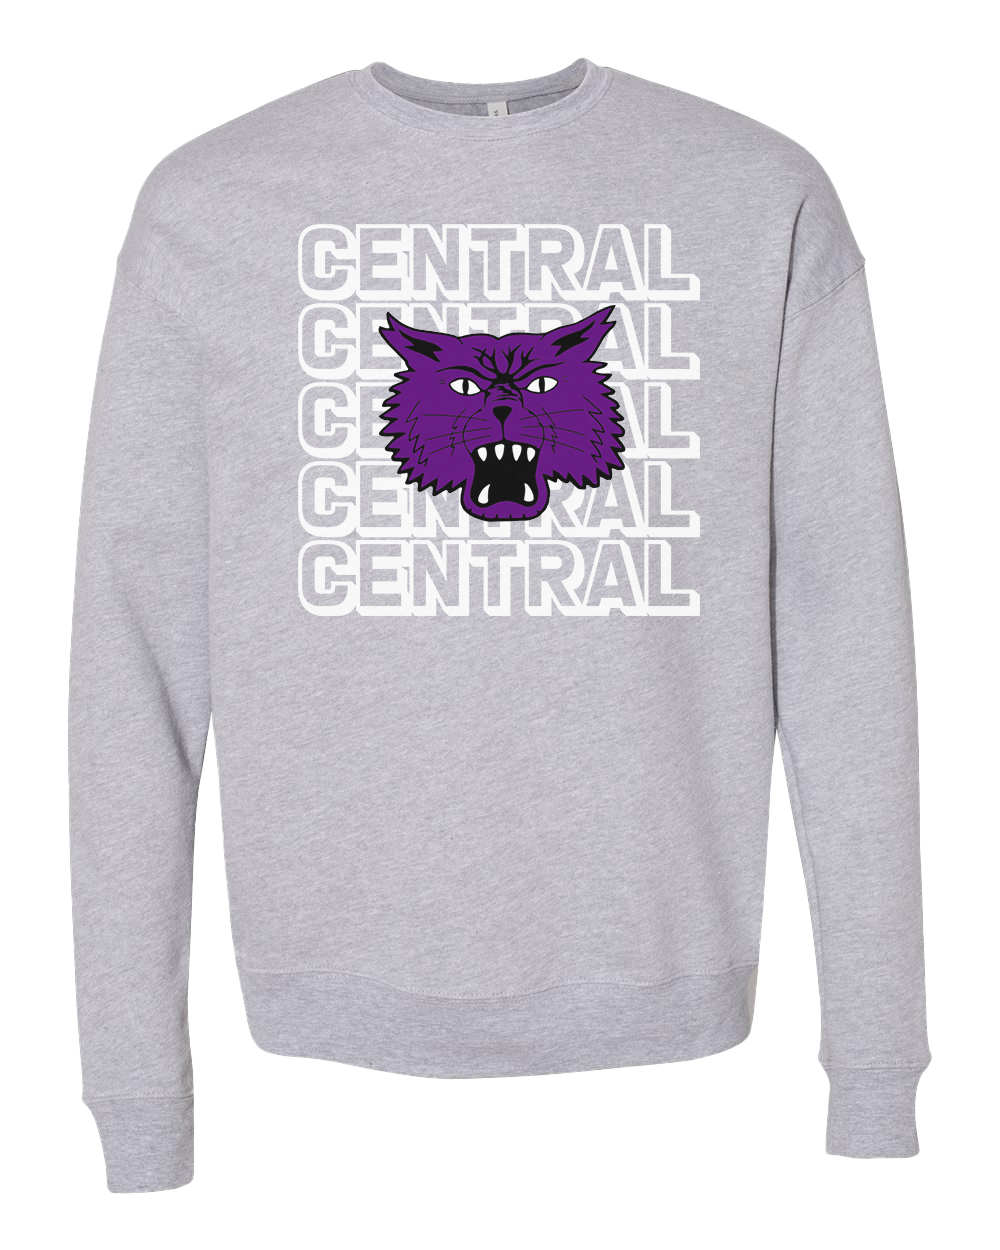 Muncie CENTRAL Bearcats Sweatshirt - Athletic Grey